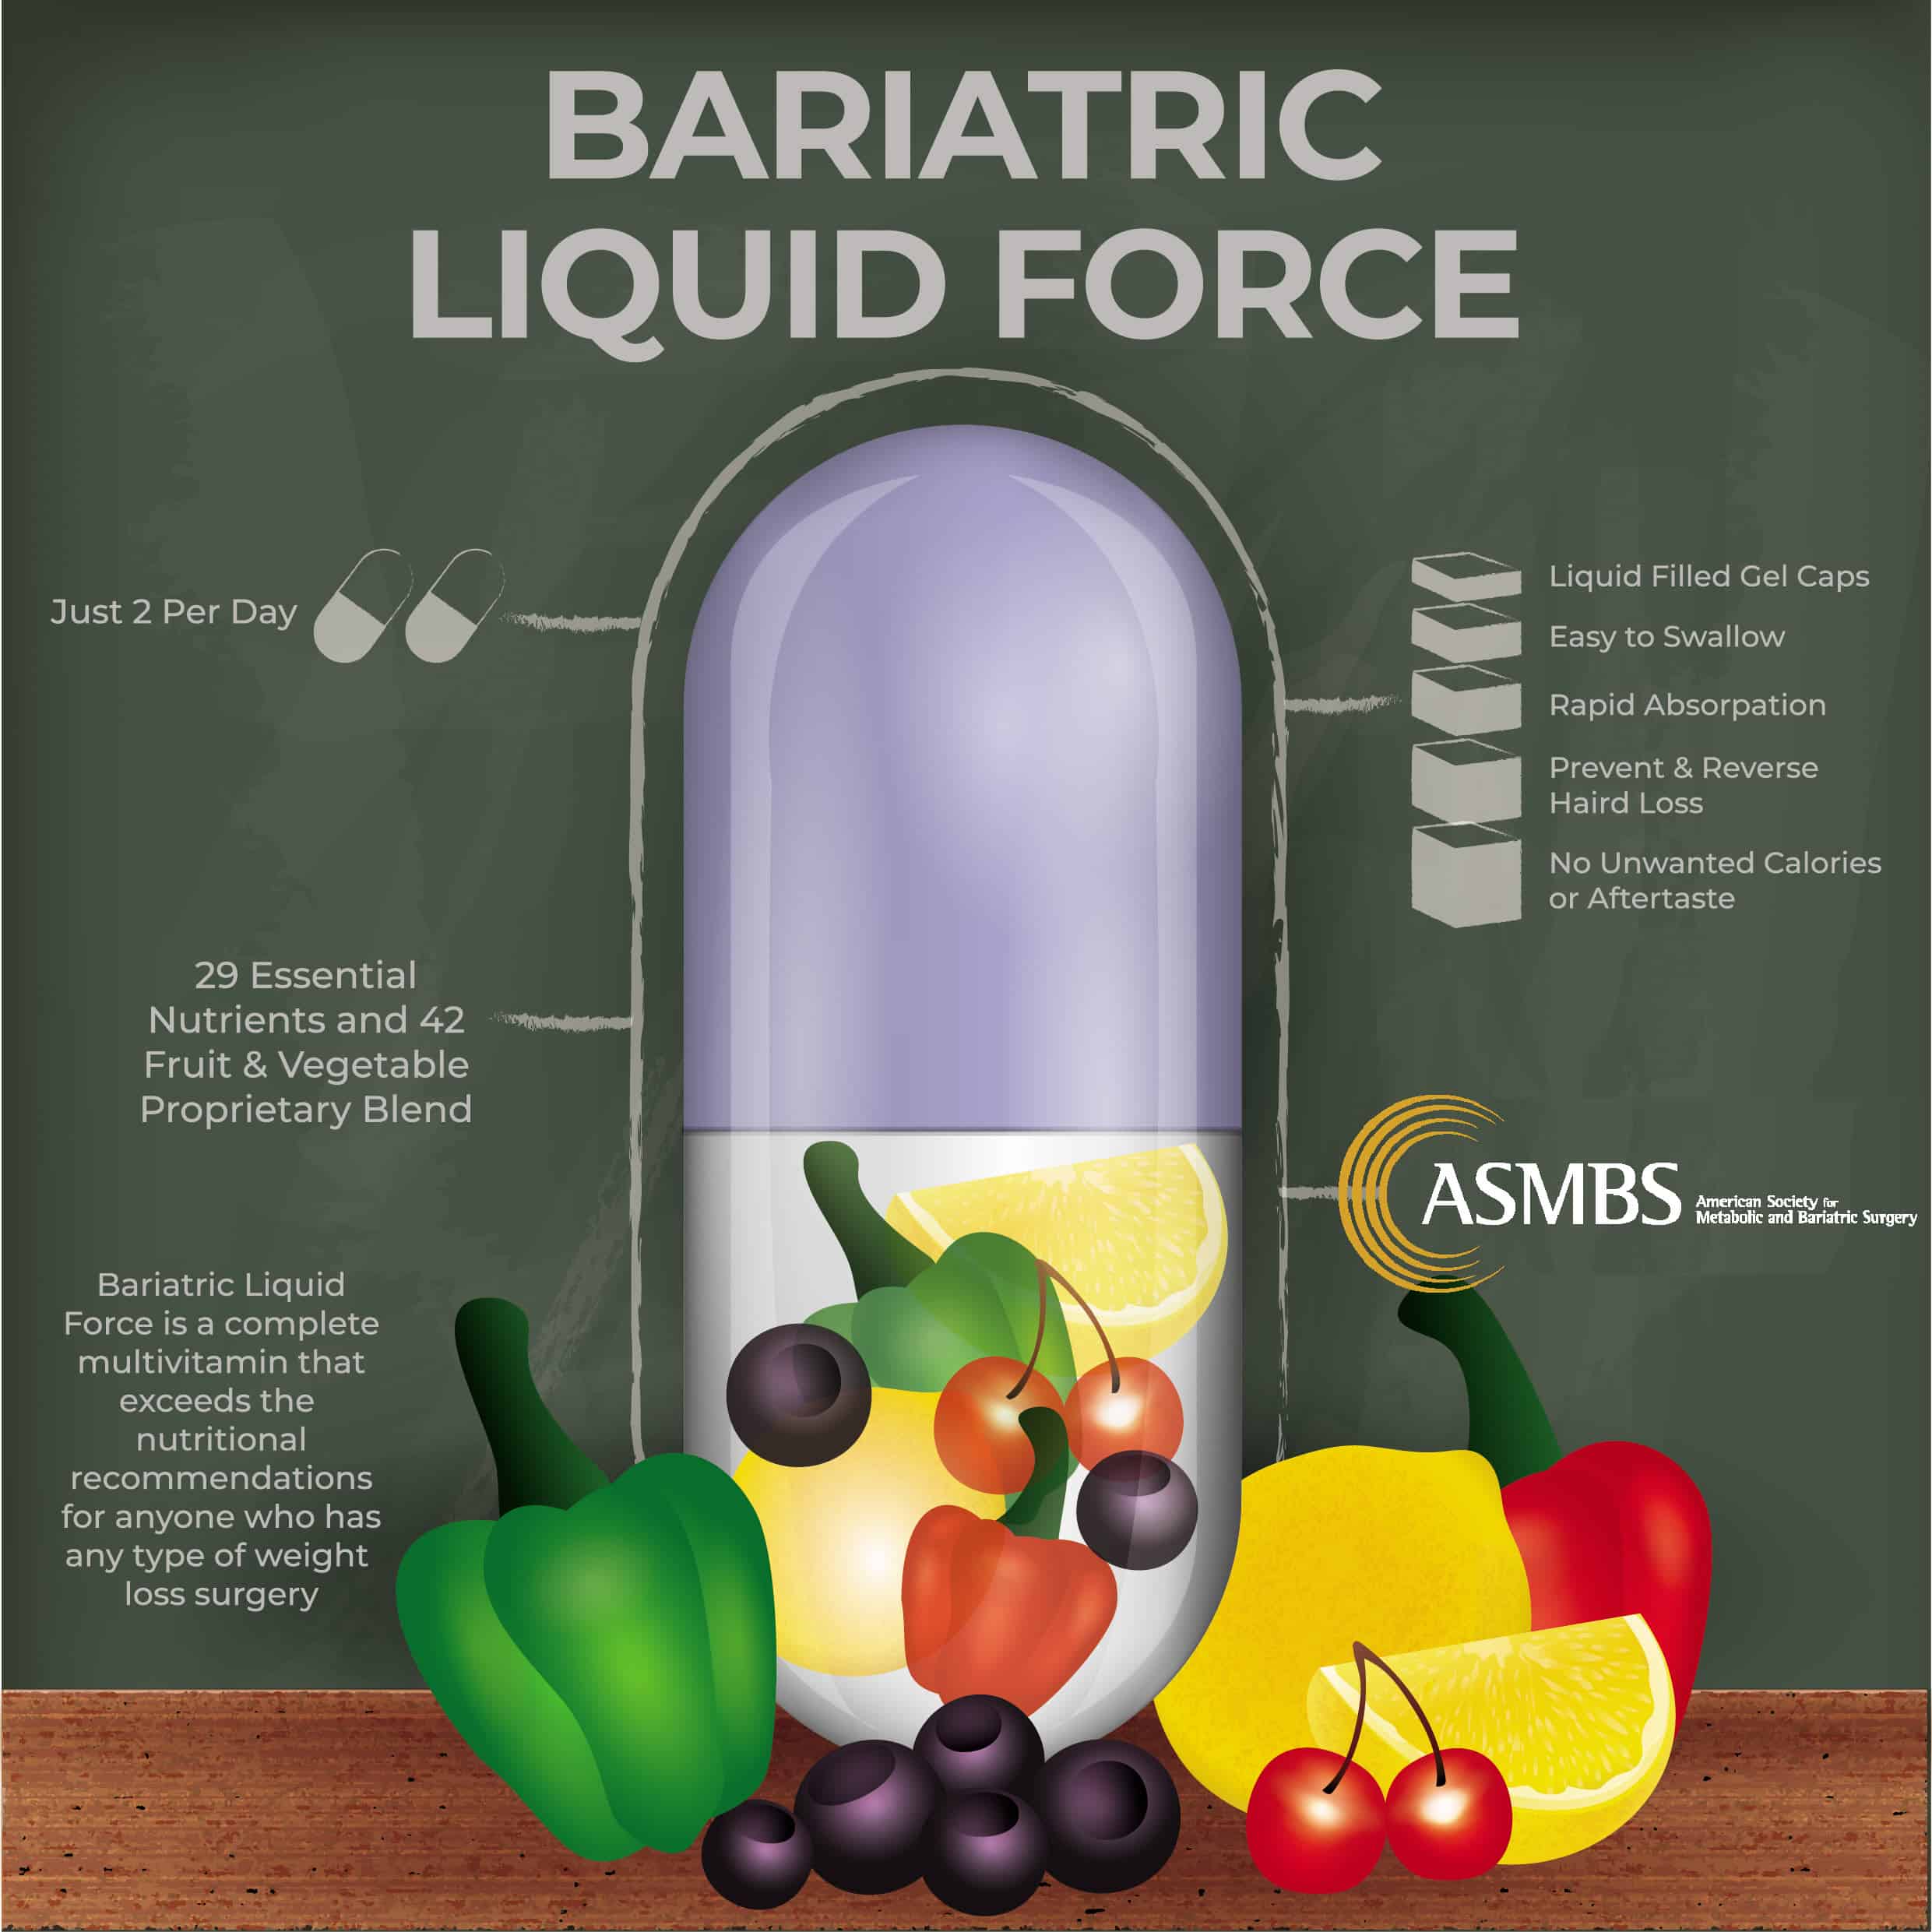 Can Anyone Take Bariatric Vitamins